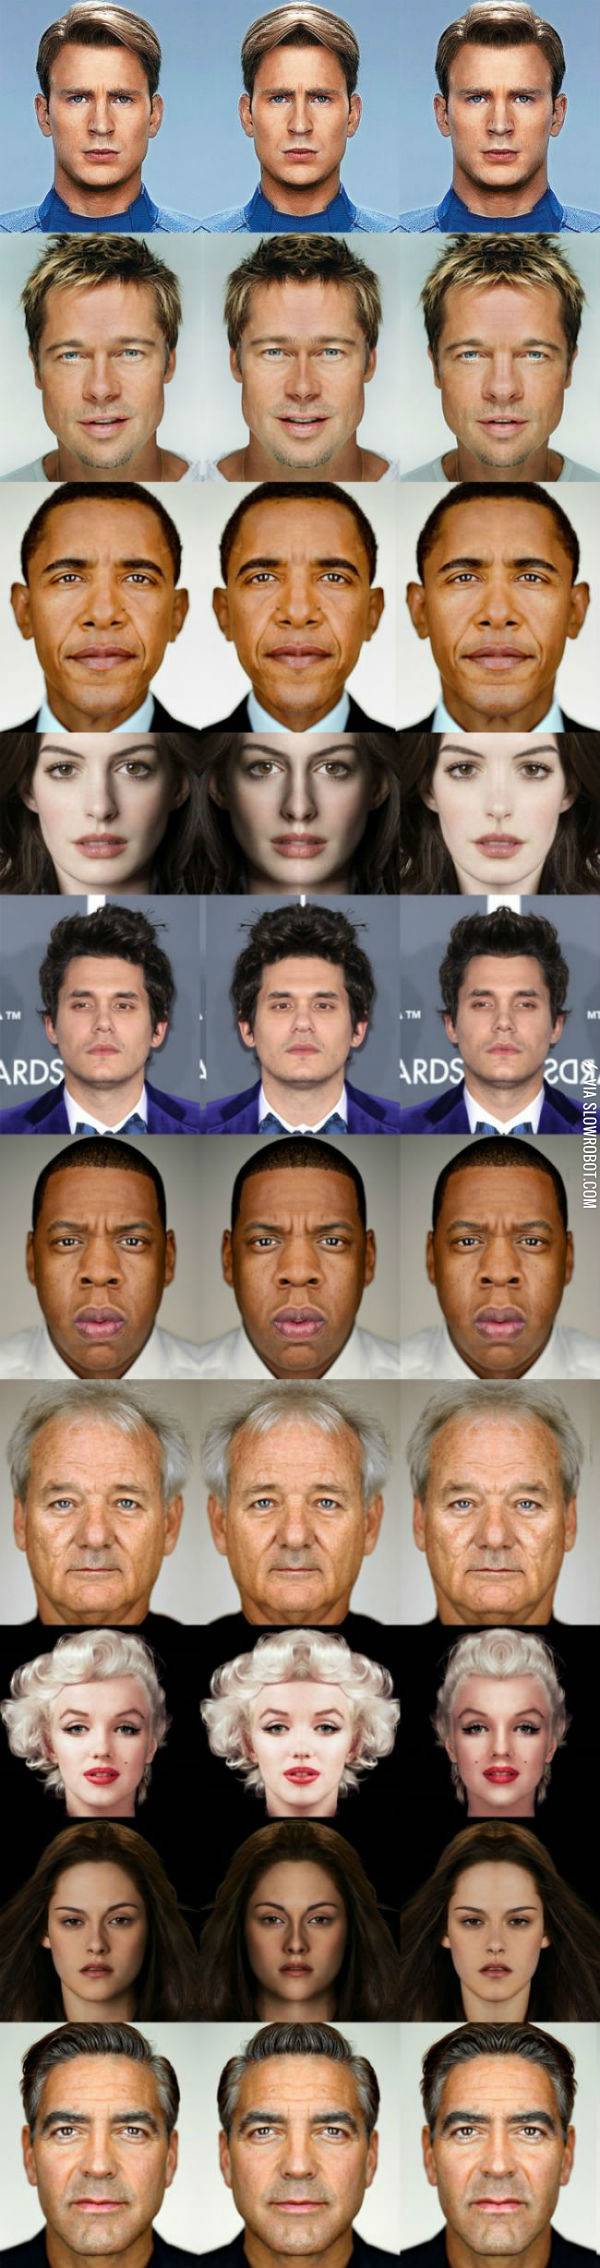 Celebrity+facial+symmetry.